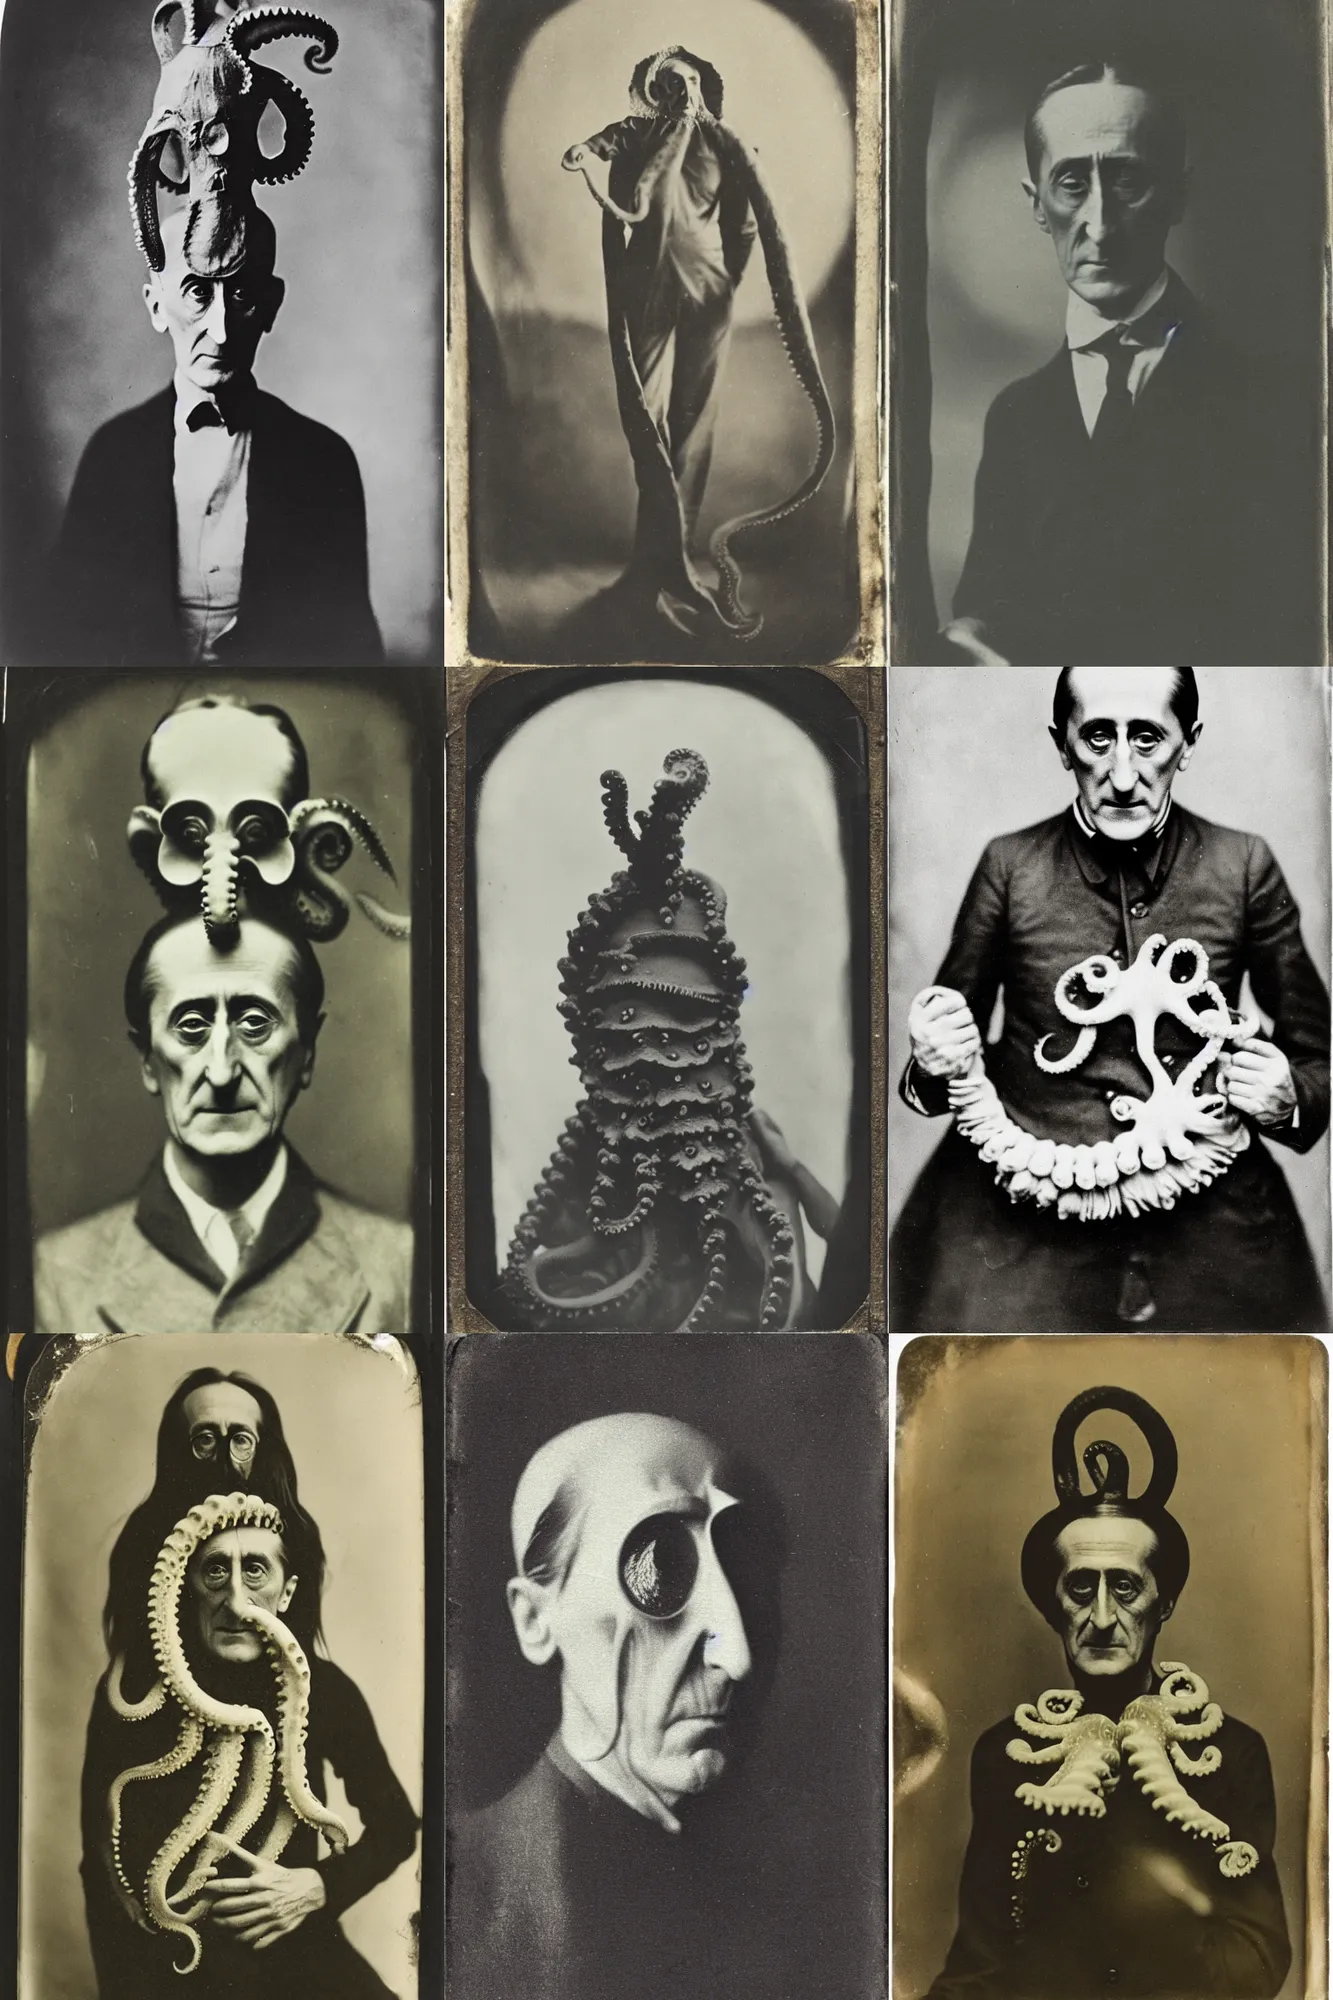 Prompt: tintype portrait of marcel duchamp in a octopus costume